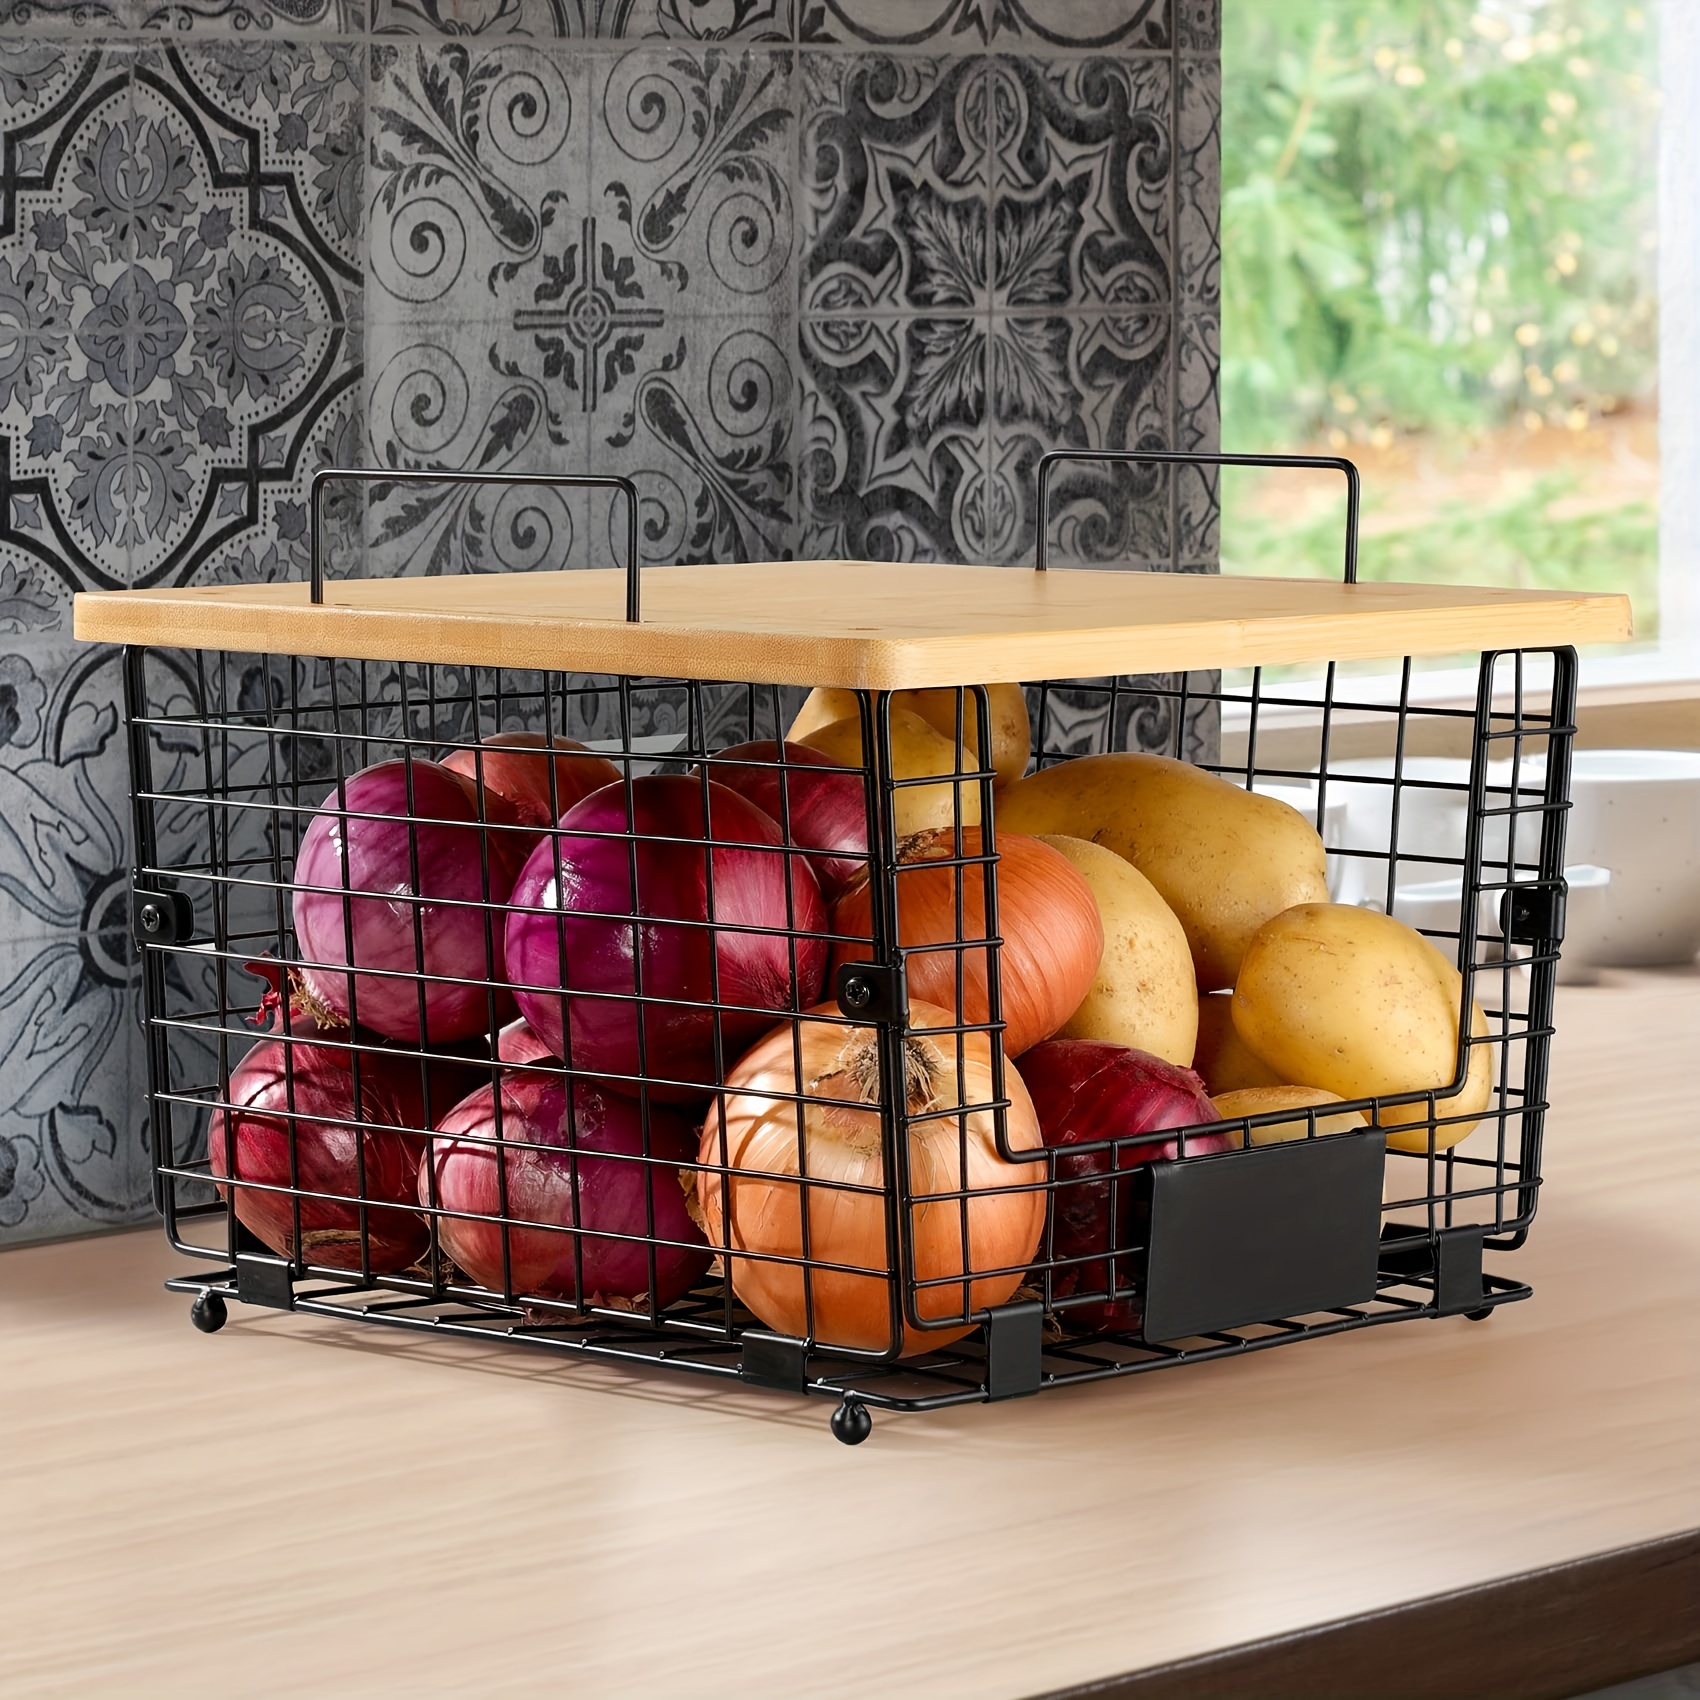 Fruit Basket Kitchen Pantry Organizers and Storage - Wooden Top